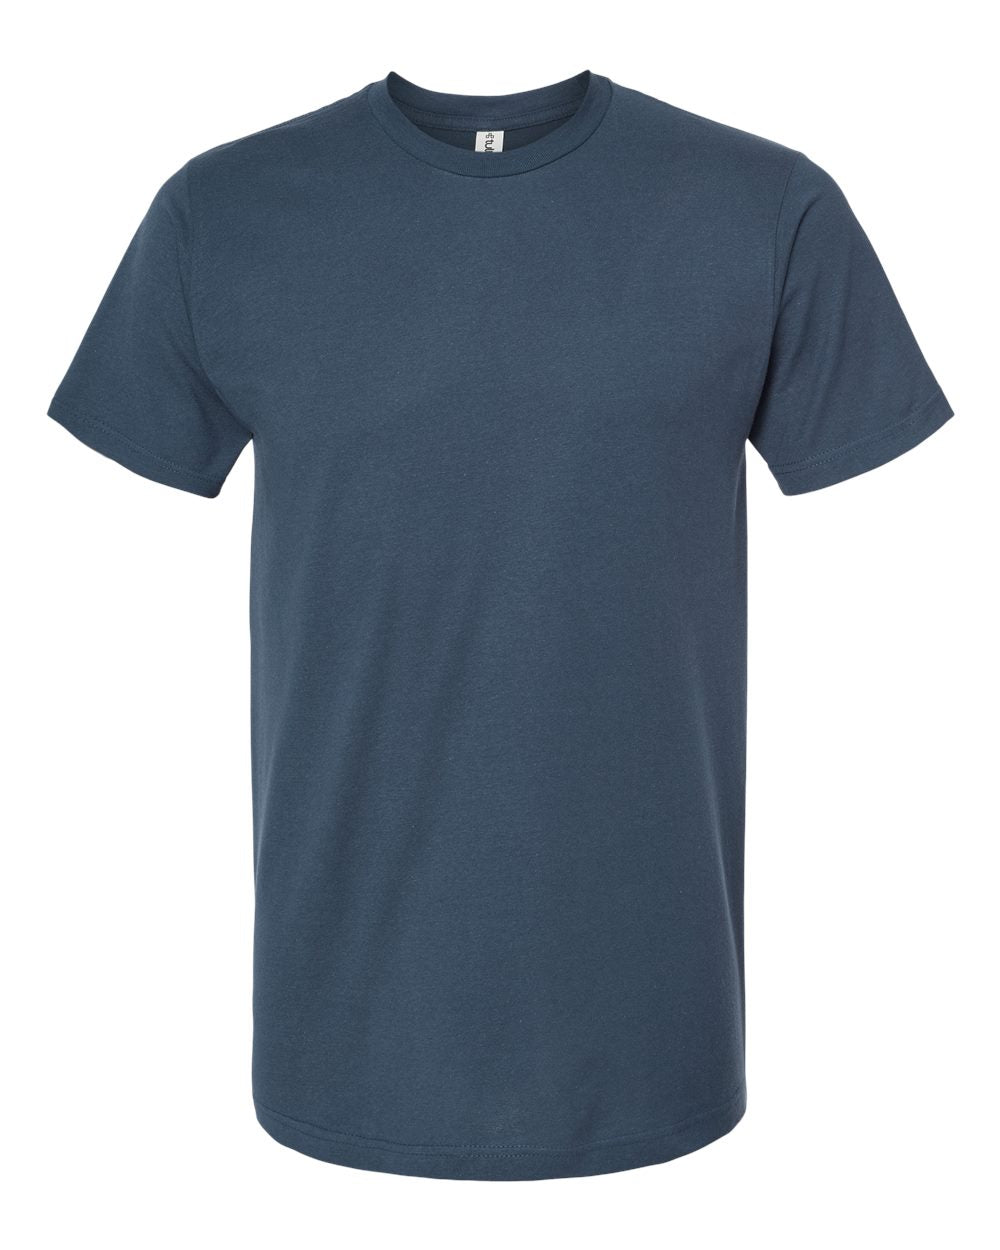 Pretreated Tultex 202 Unisex Fine Jersey T-Shirt - Indigo